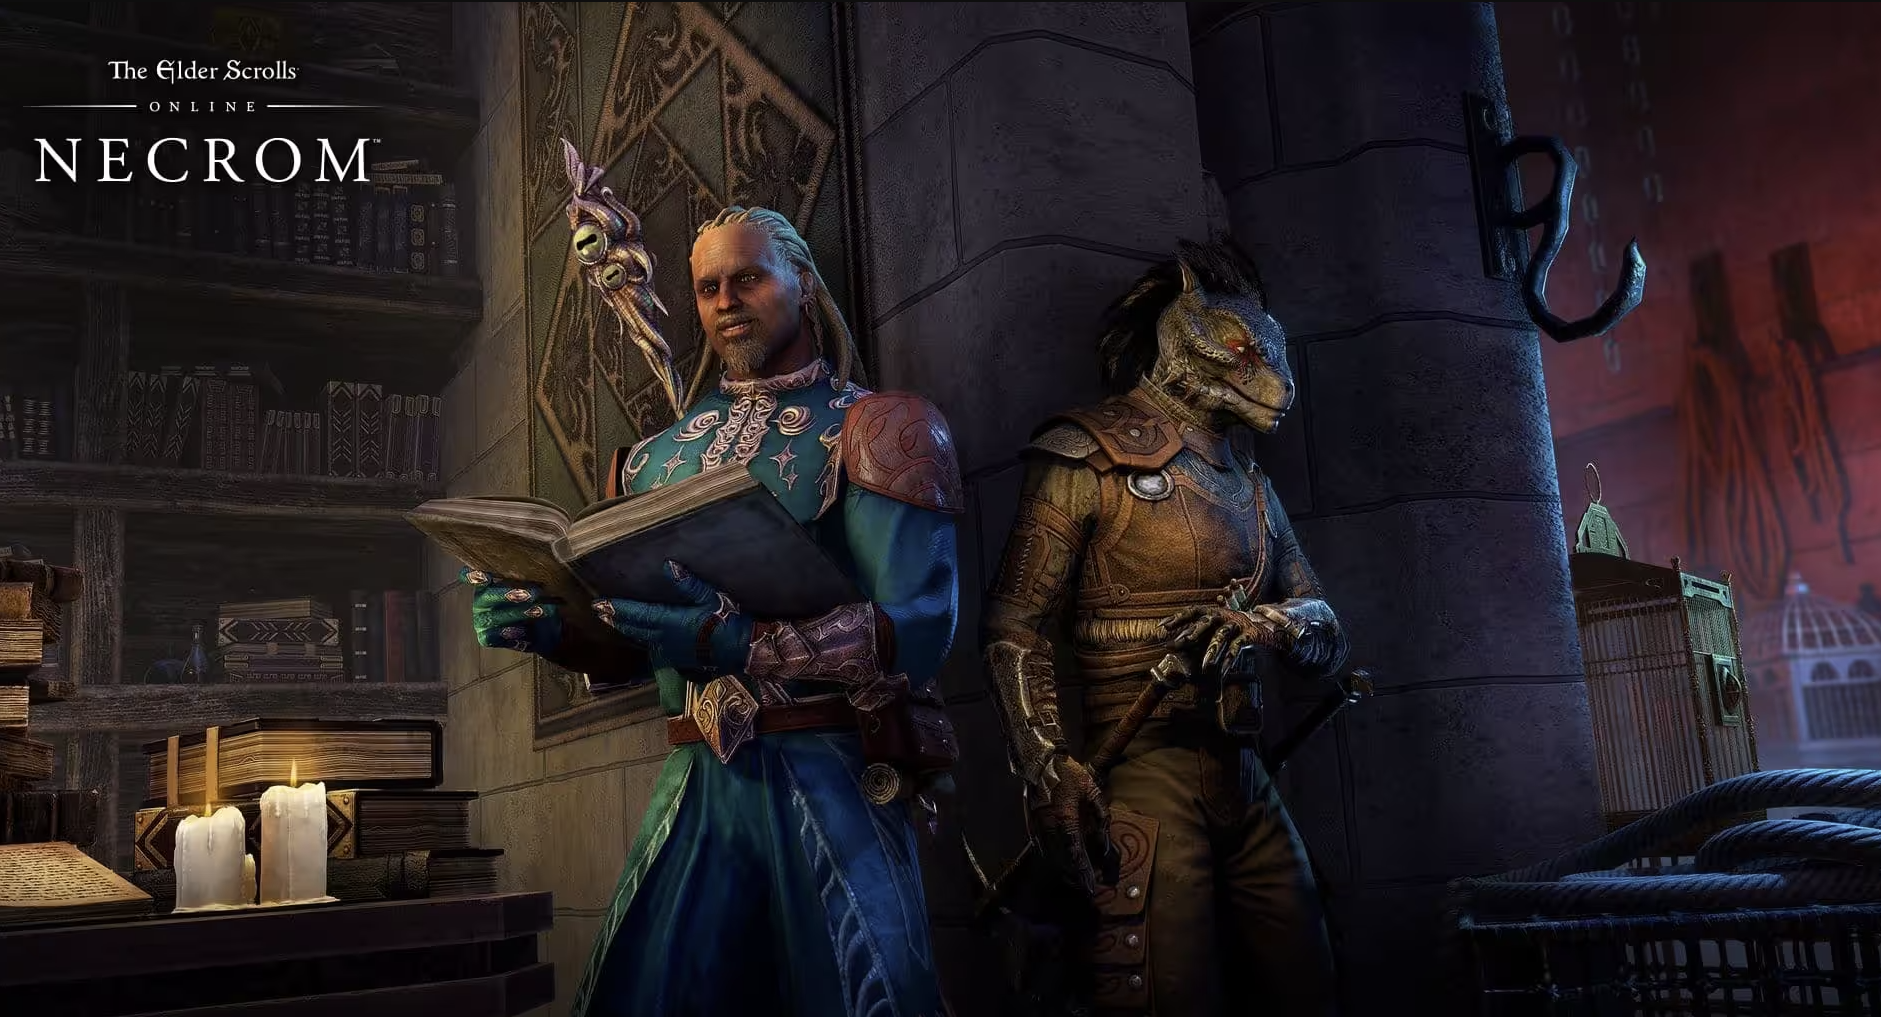 Lords of the Fallen Gameplay Walkthrough Part 1 - First Warden 